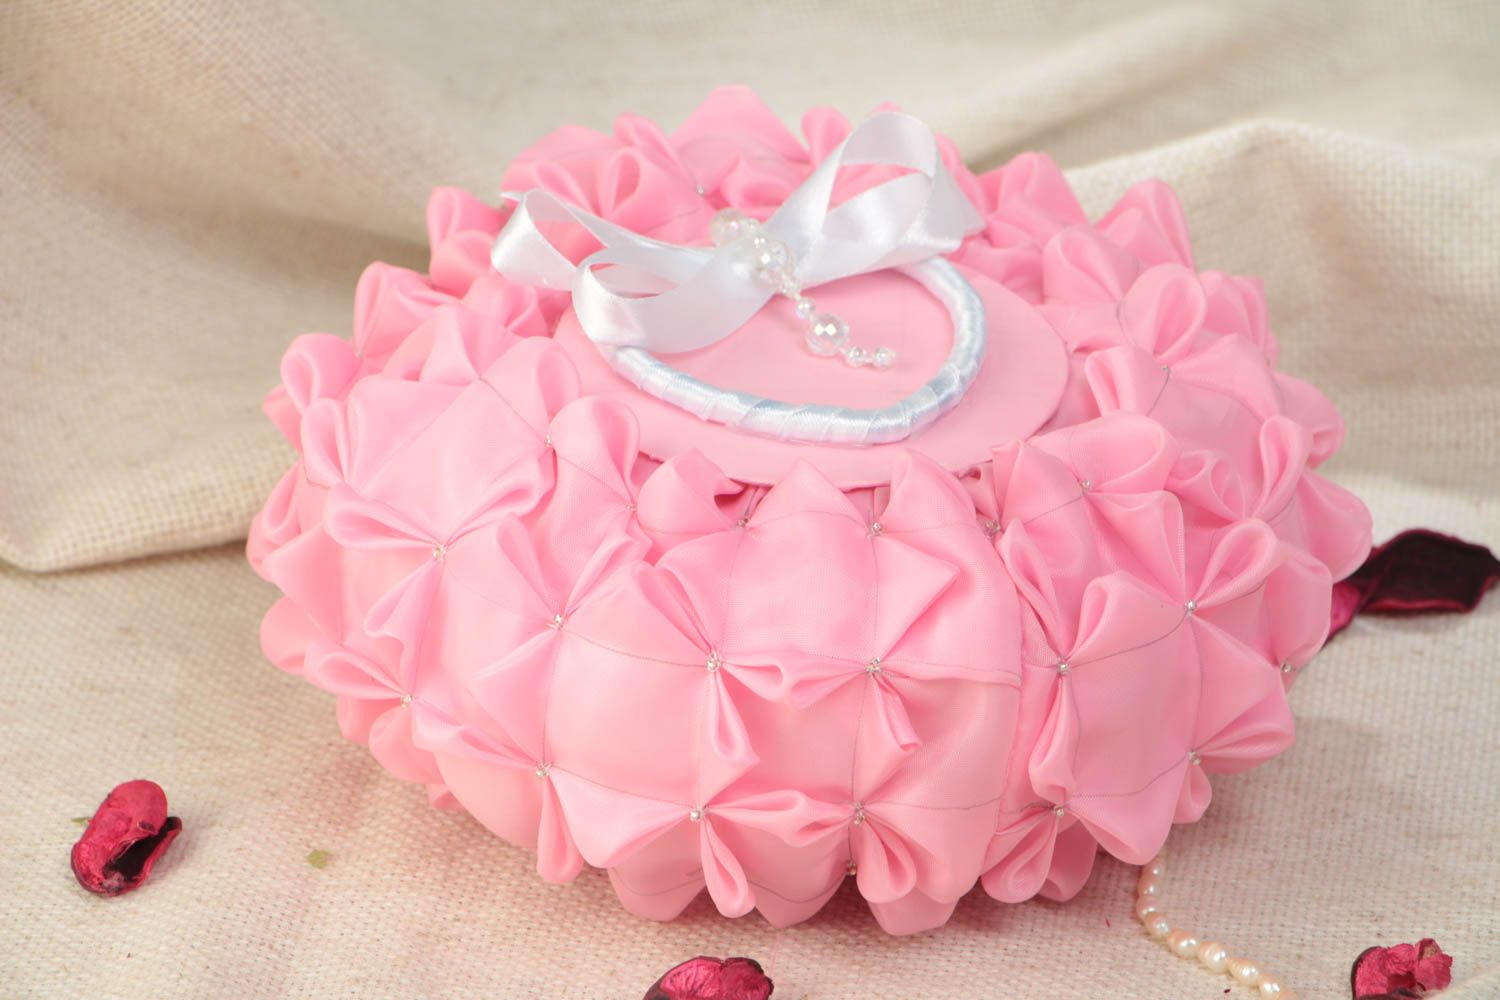 Атласная подушка под кольца розовая мягкая с белым бантиком ручная работа фото 1